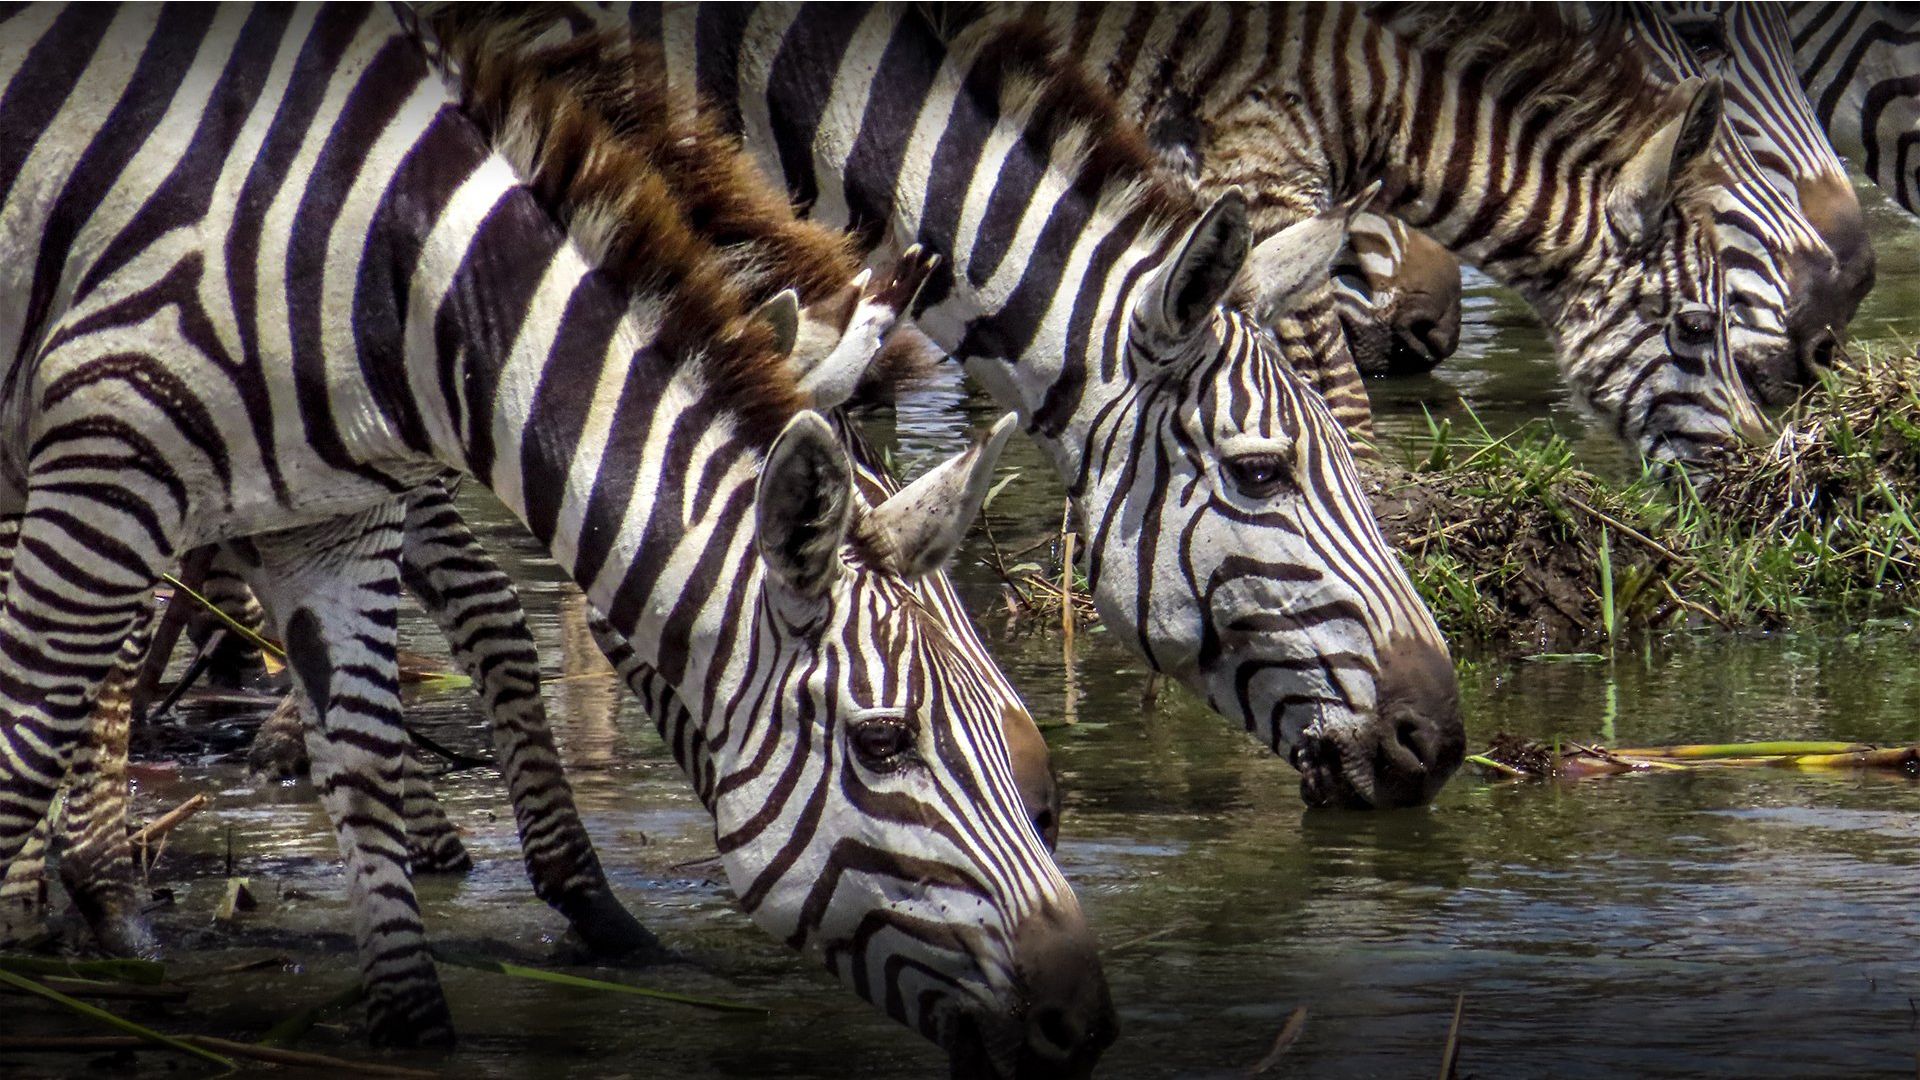 A herd of zebras at a watering hole in Nairobi National Park, Kenya taken by Georgina Goodwin.